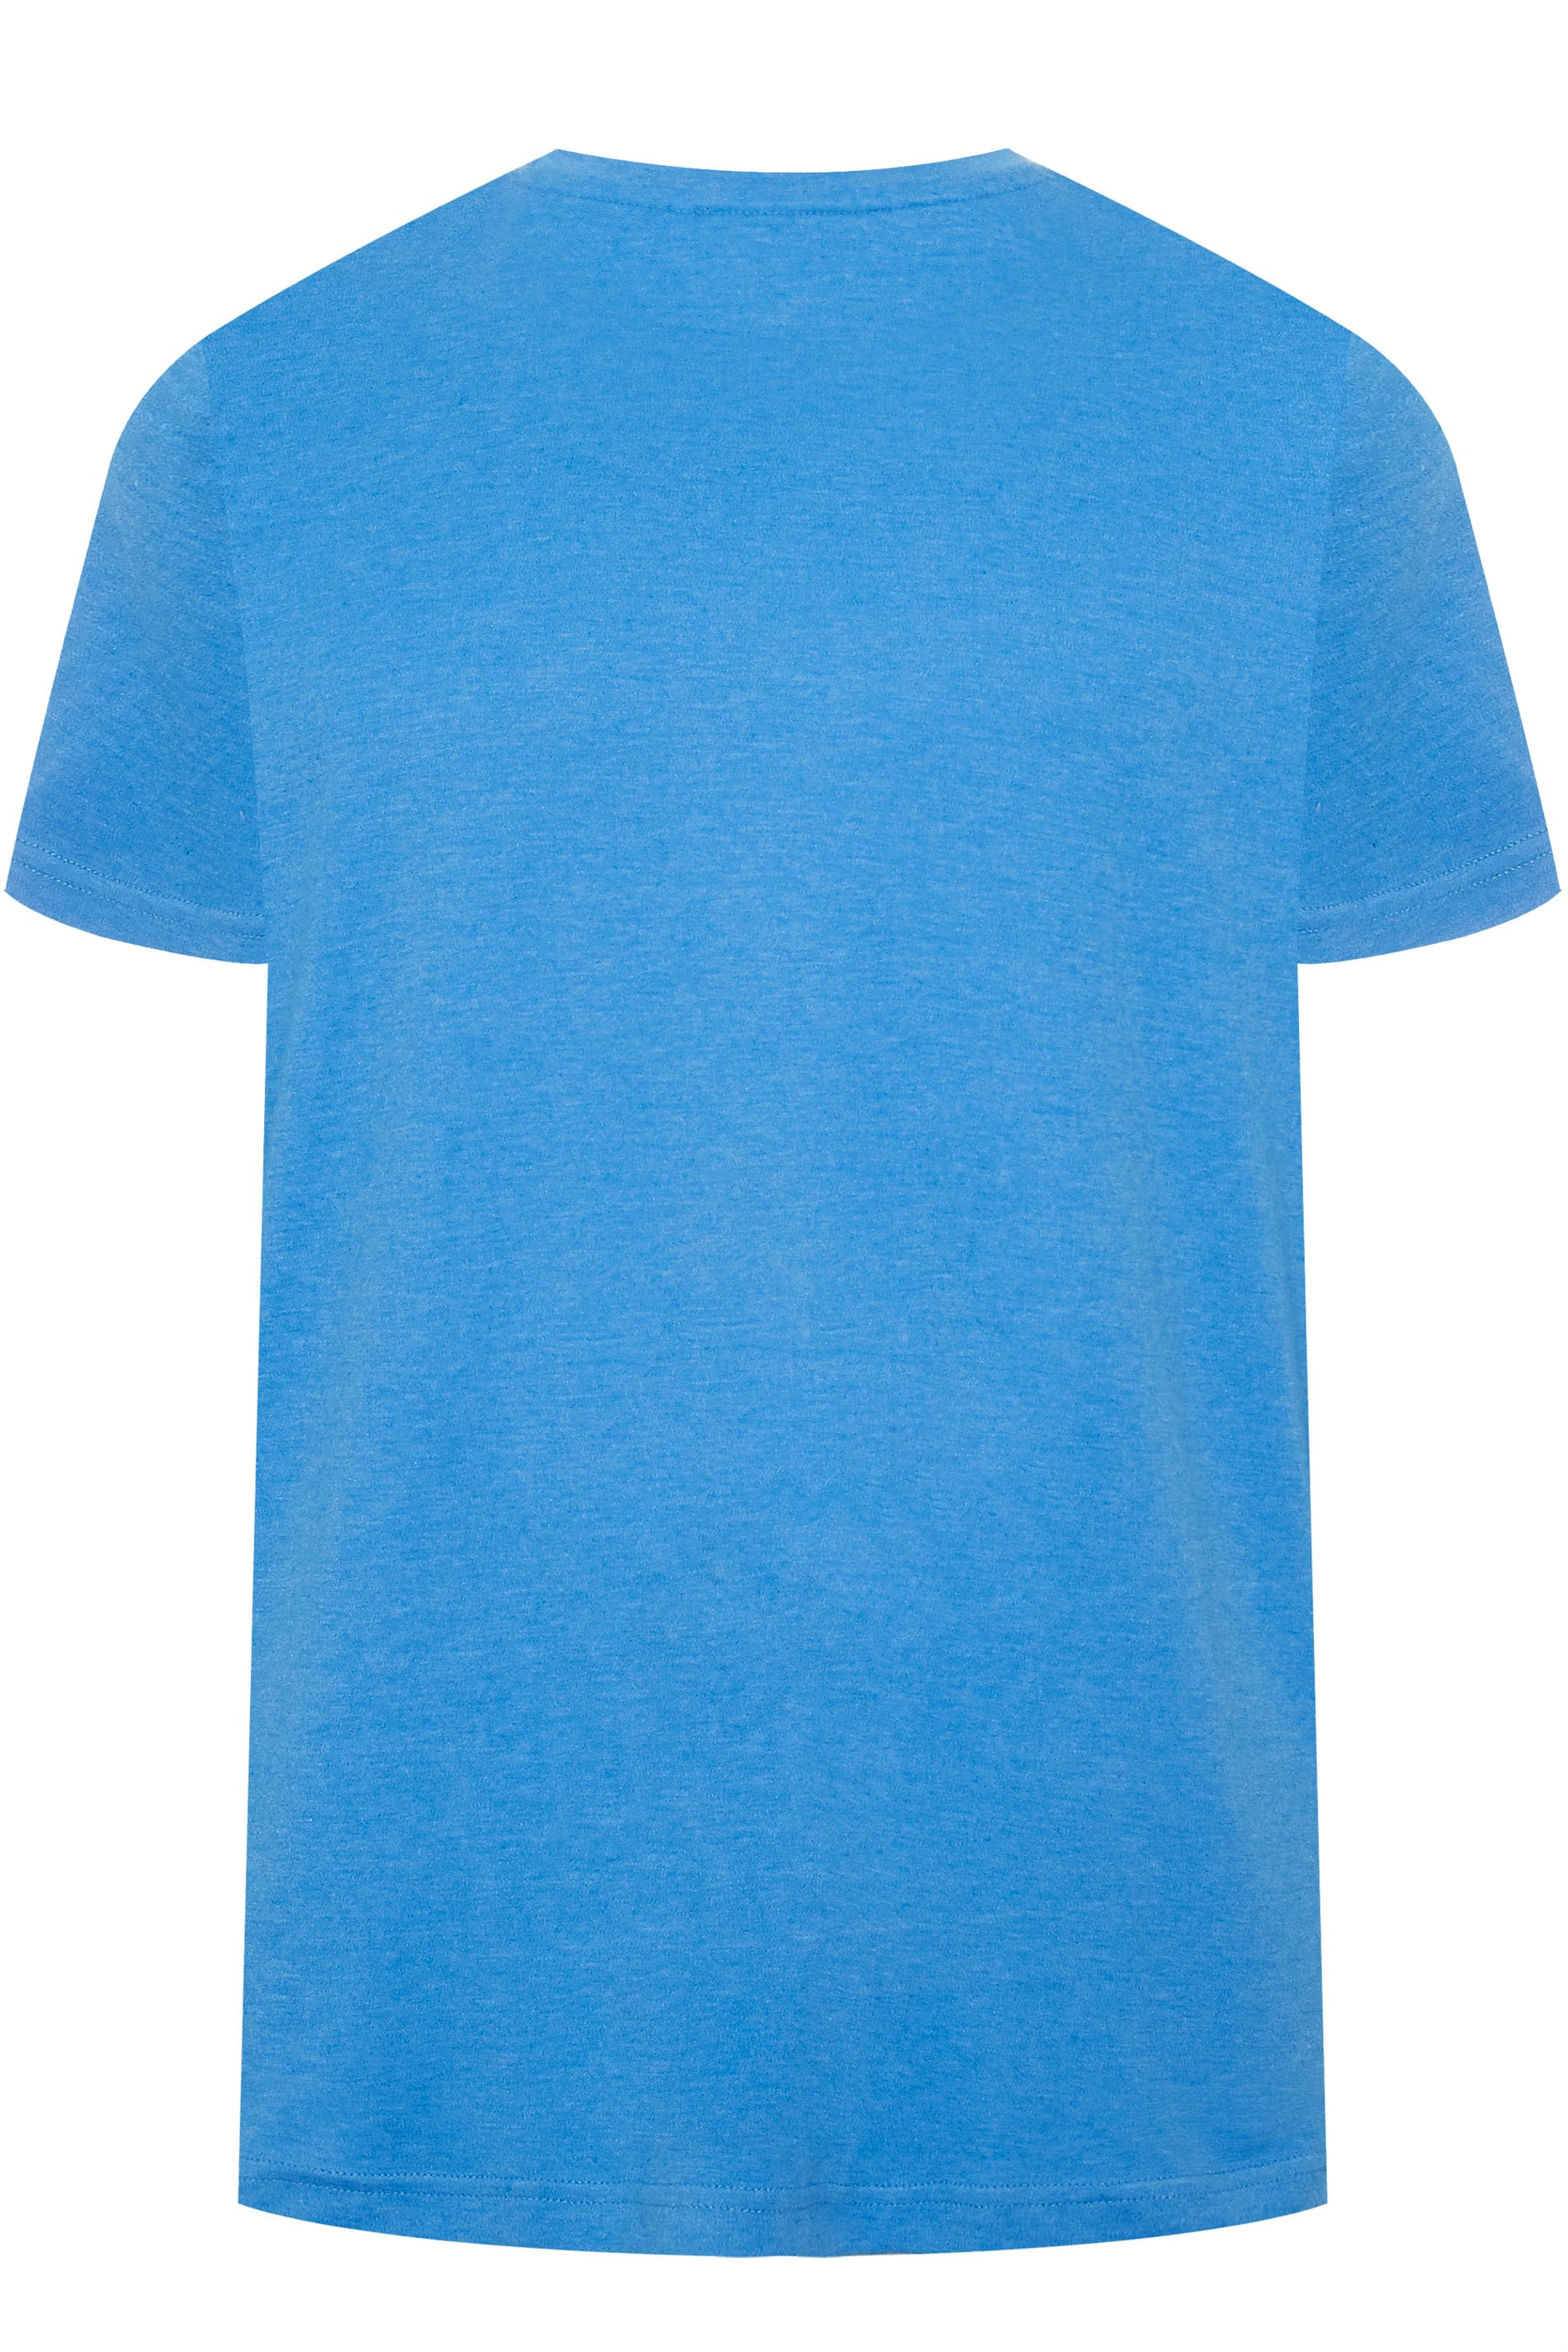 BAR HARBOUR Blue Plain Crew Neck T-Shirt | BadRhino